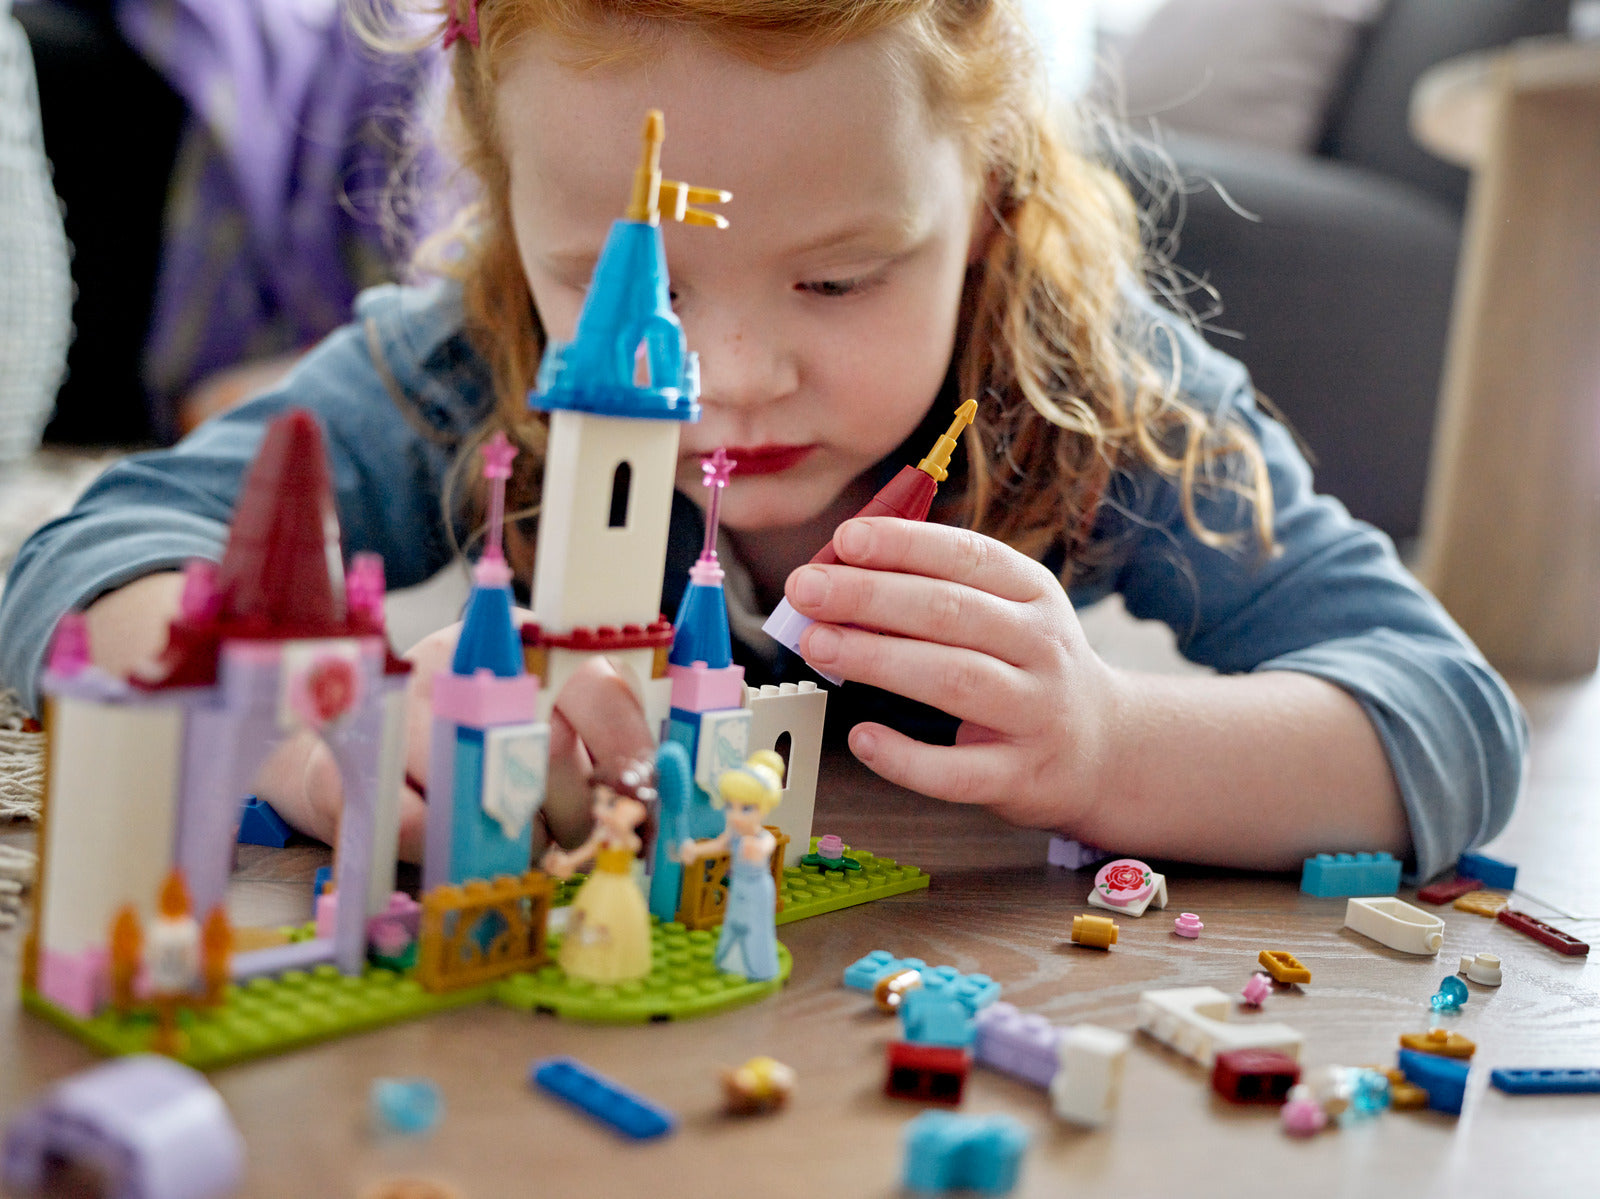 LEGO Disney: Disney Princess Creative Castles - (43219)